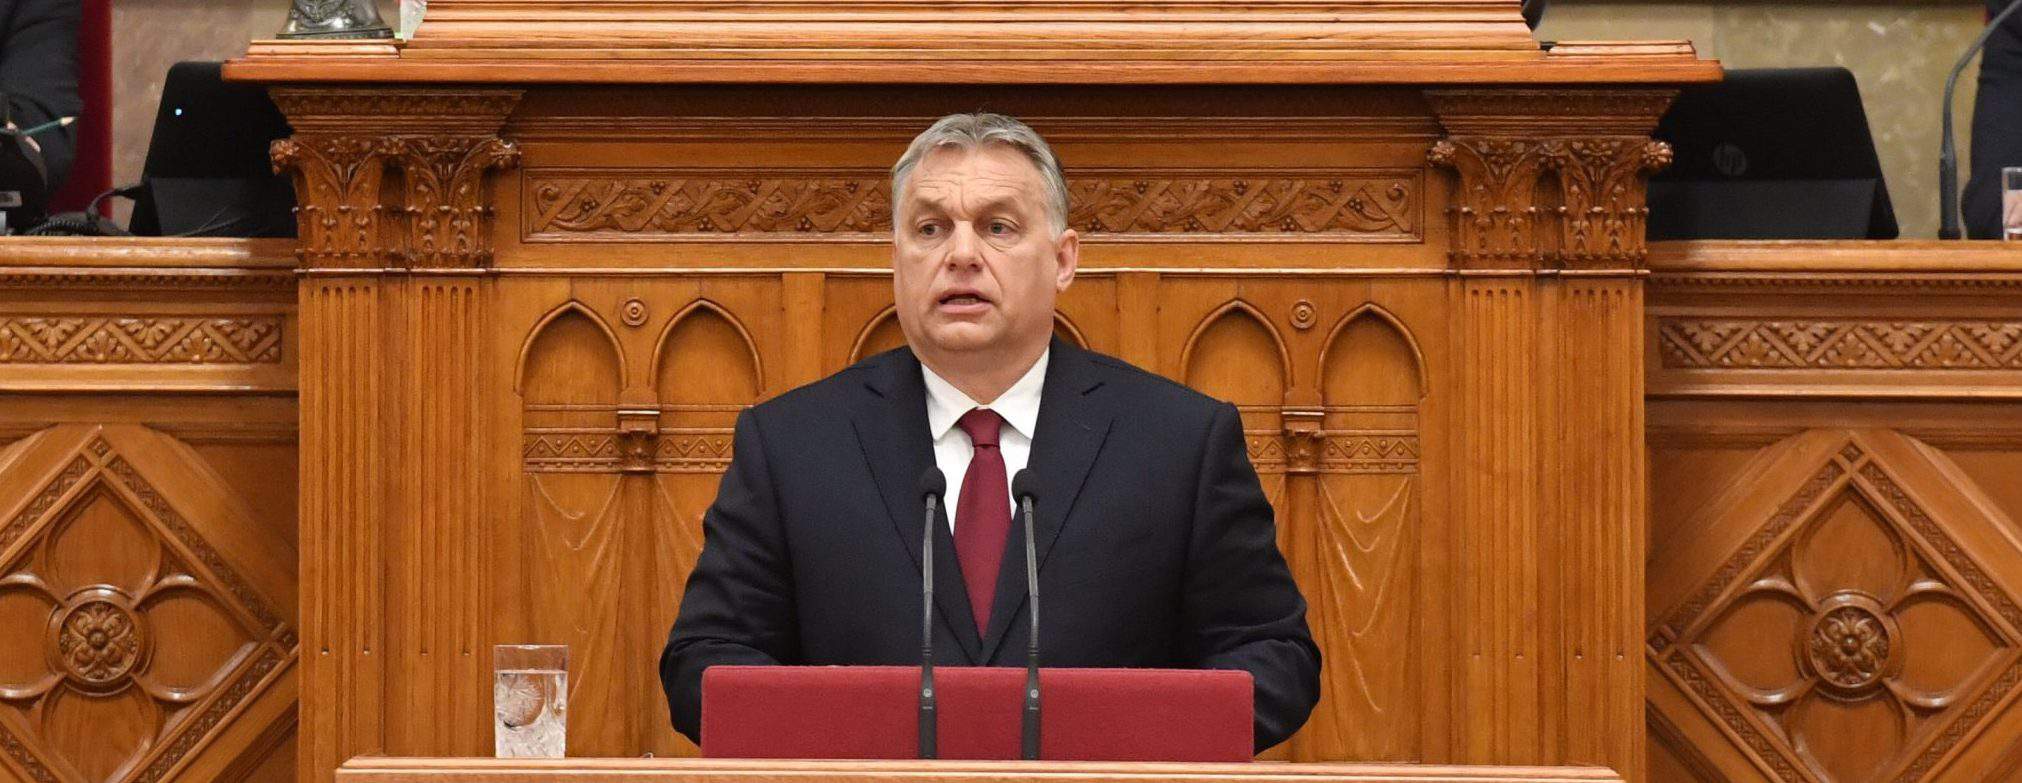 Mađarski premijer Orbán